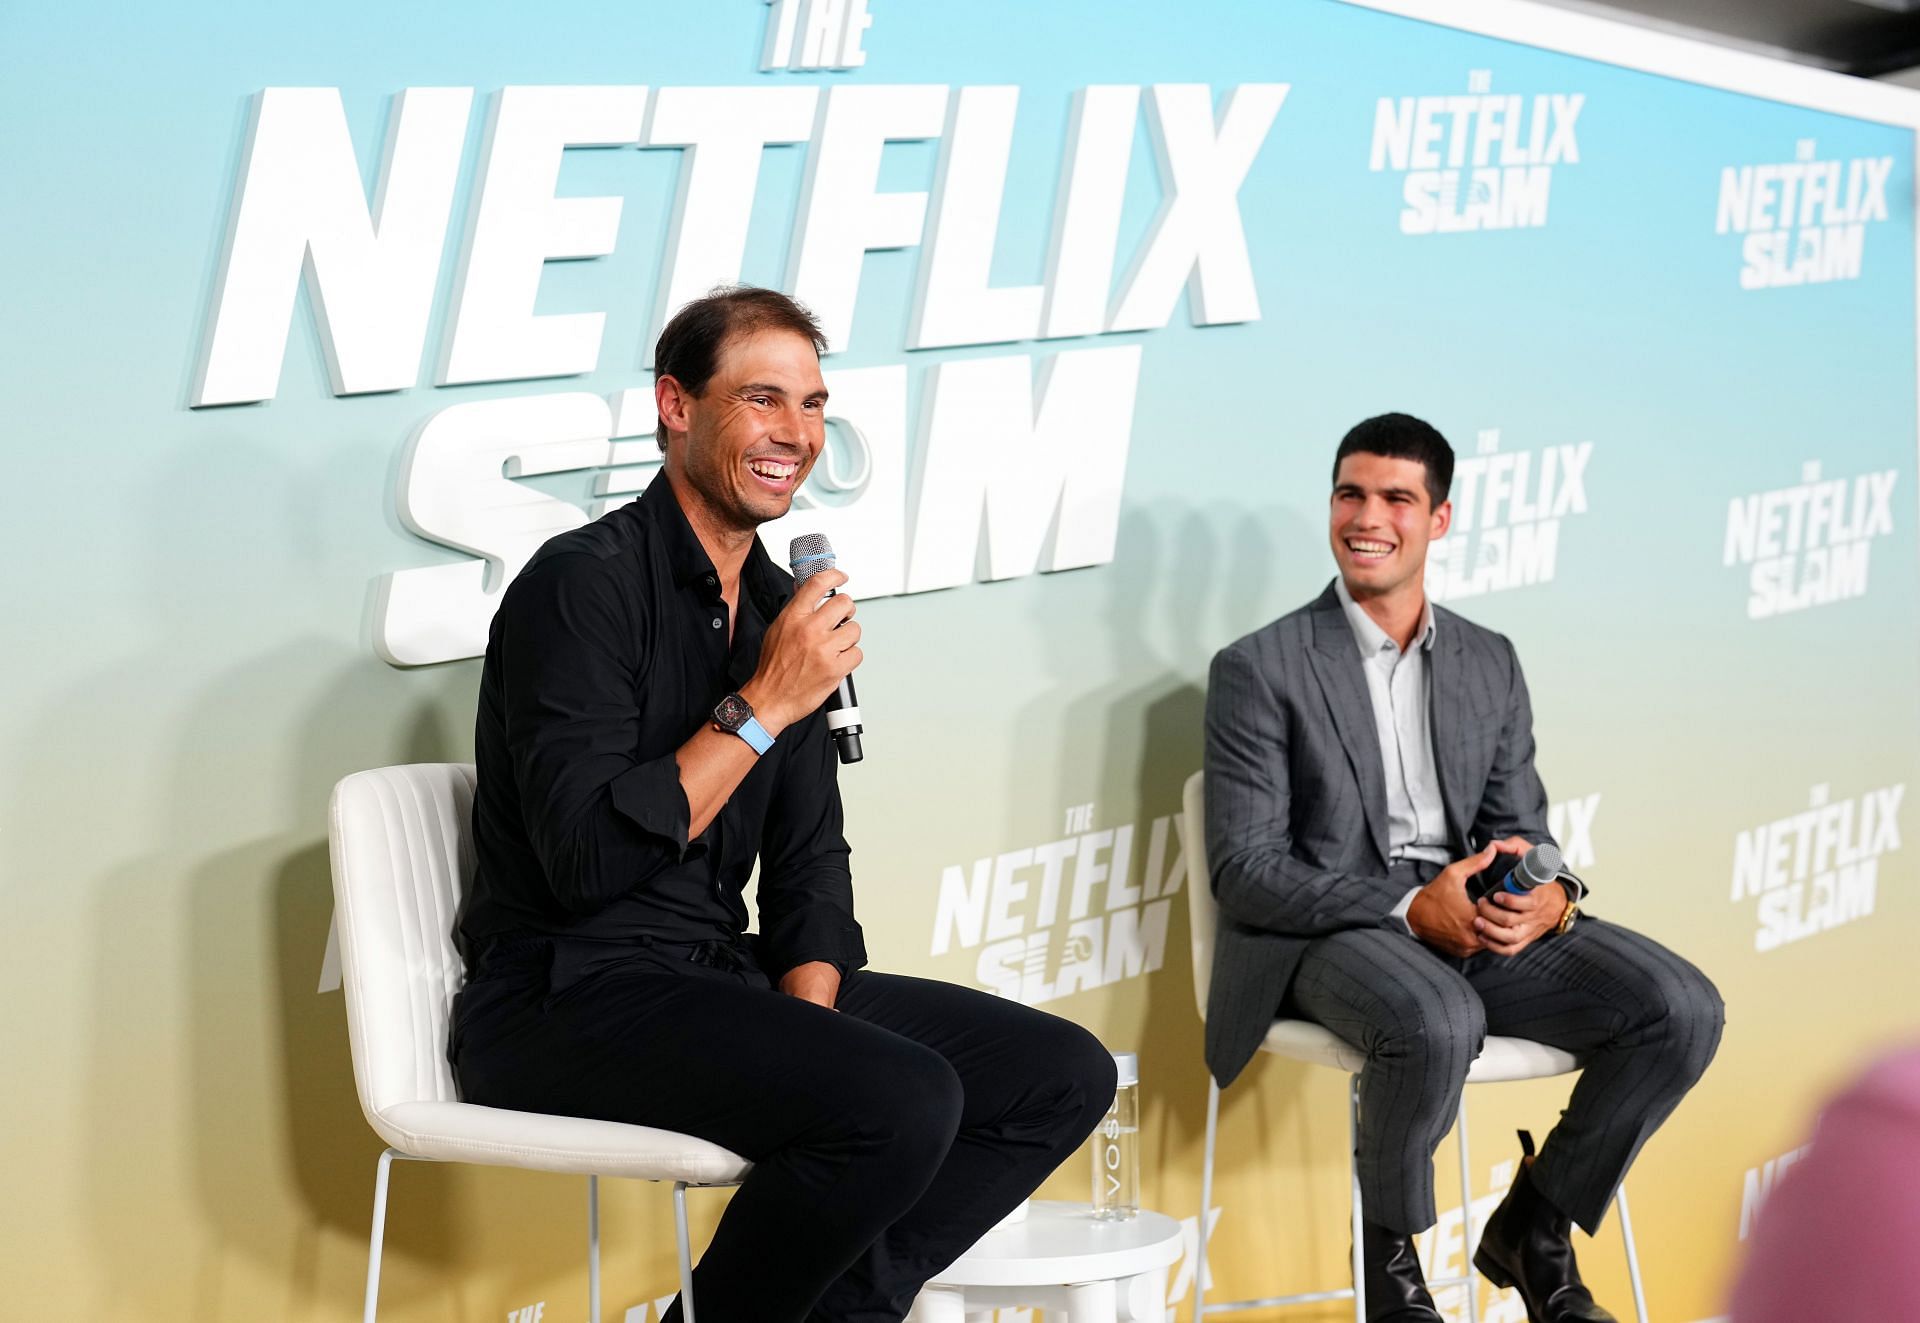 Rafael Nadal and Carlos Alcaraz speak onstage during The Netflix Slam media availability event at Mandalay Bay Resort and Casino